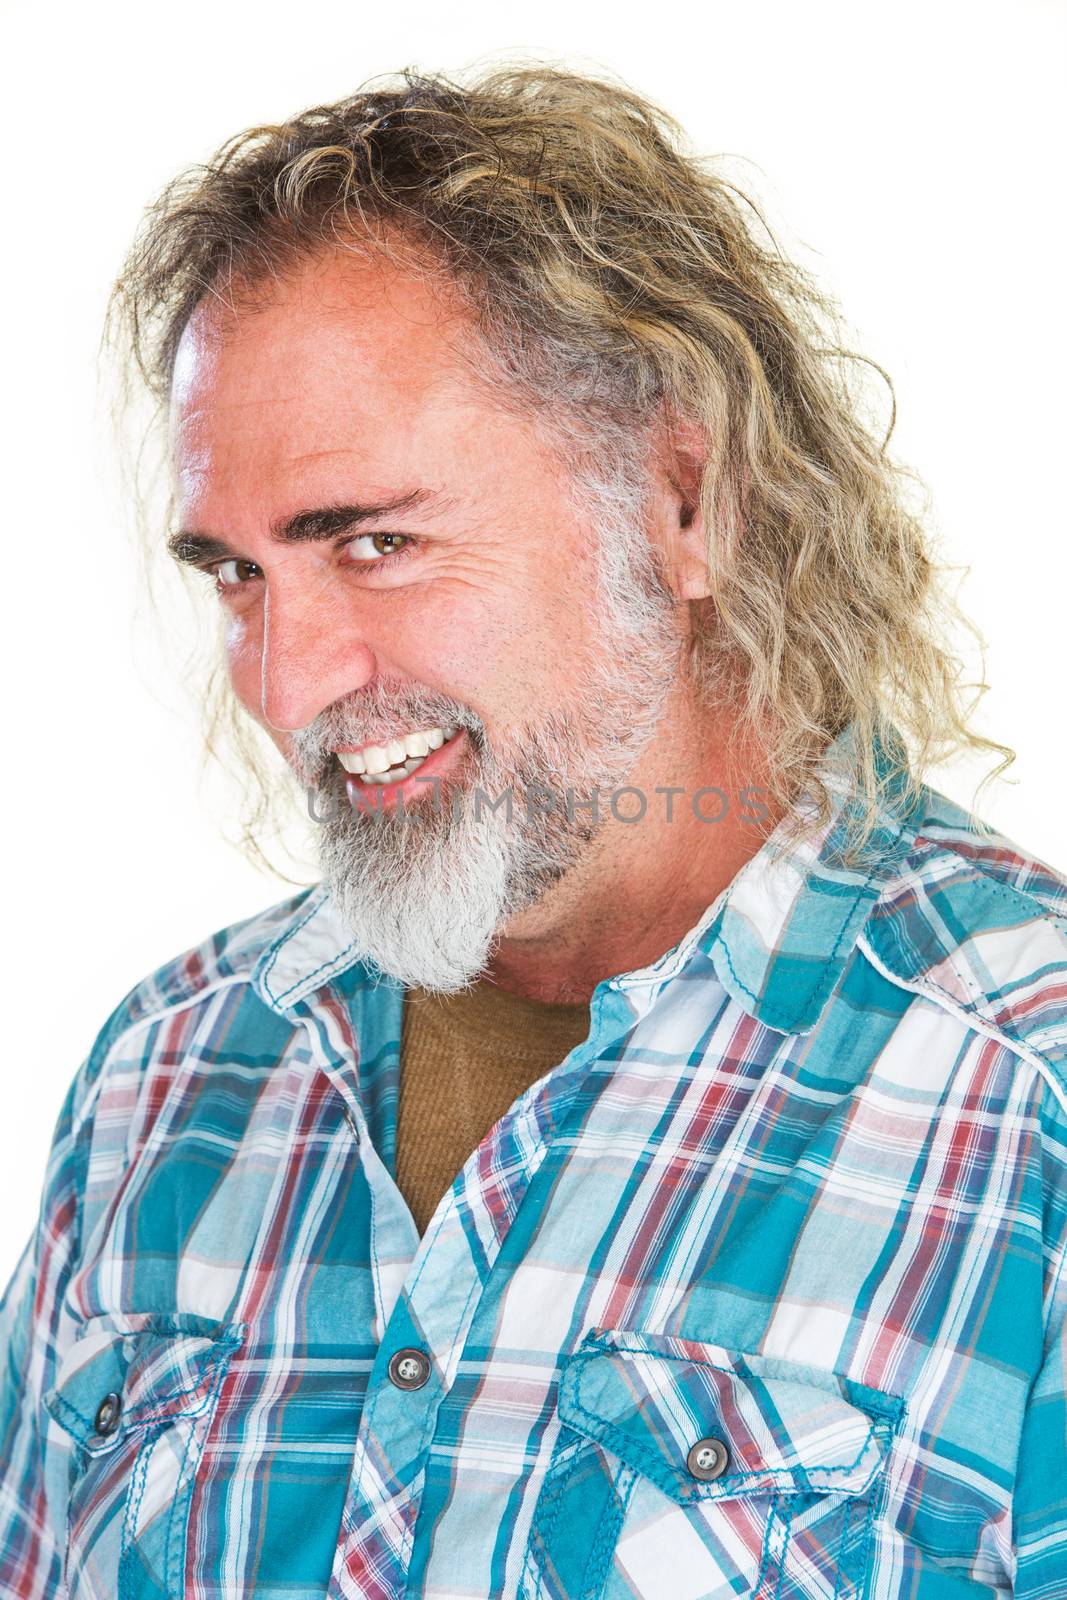 Flirtacious man with big smile and long hair